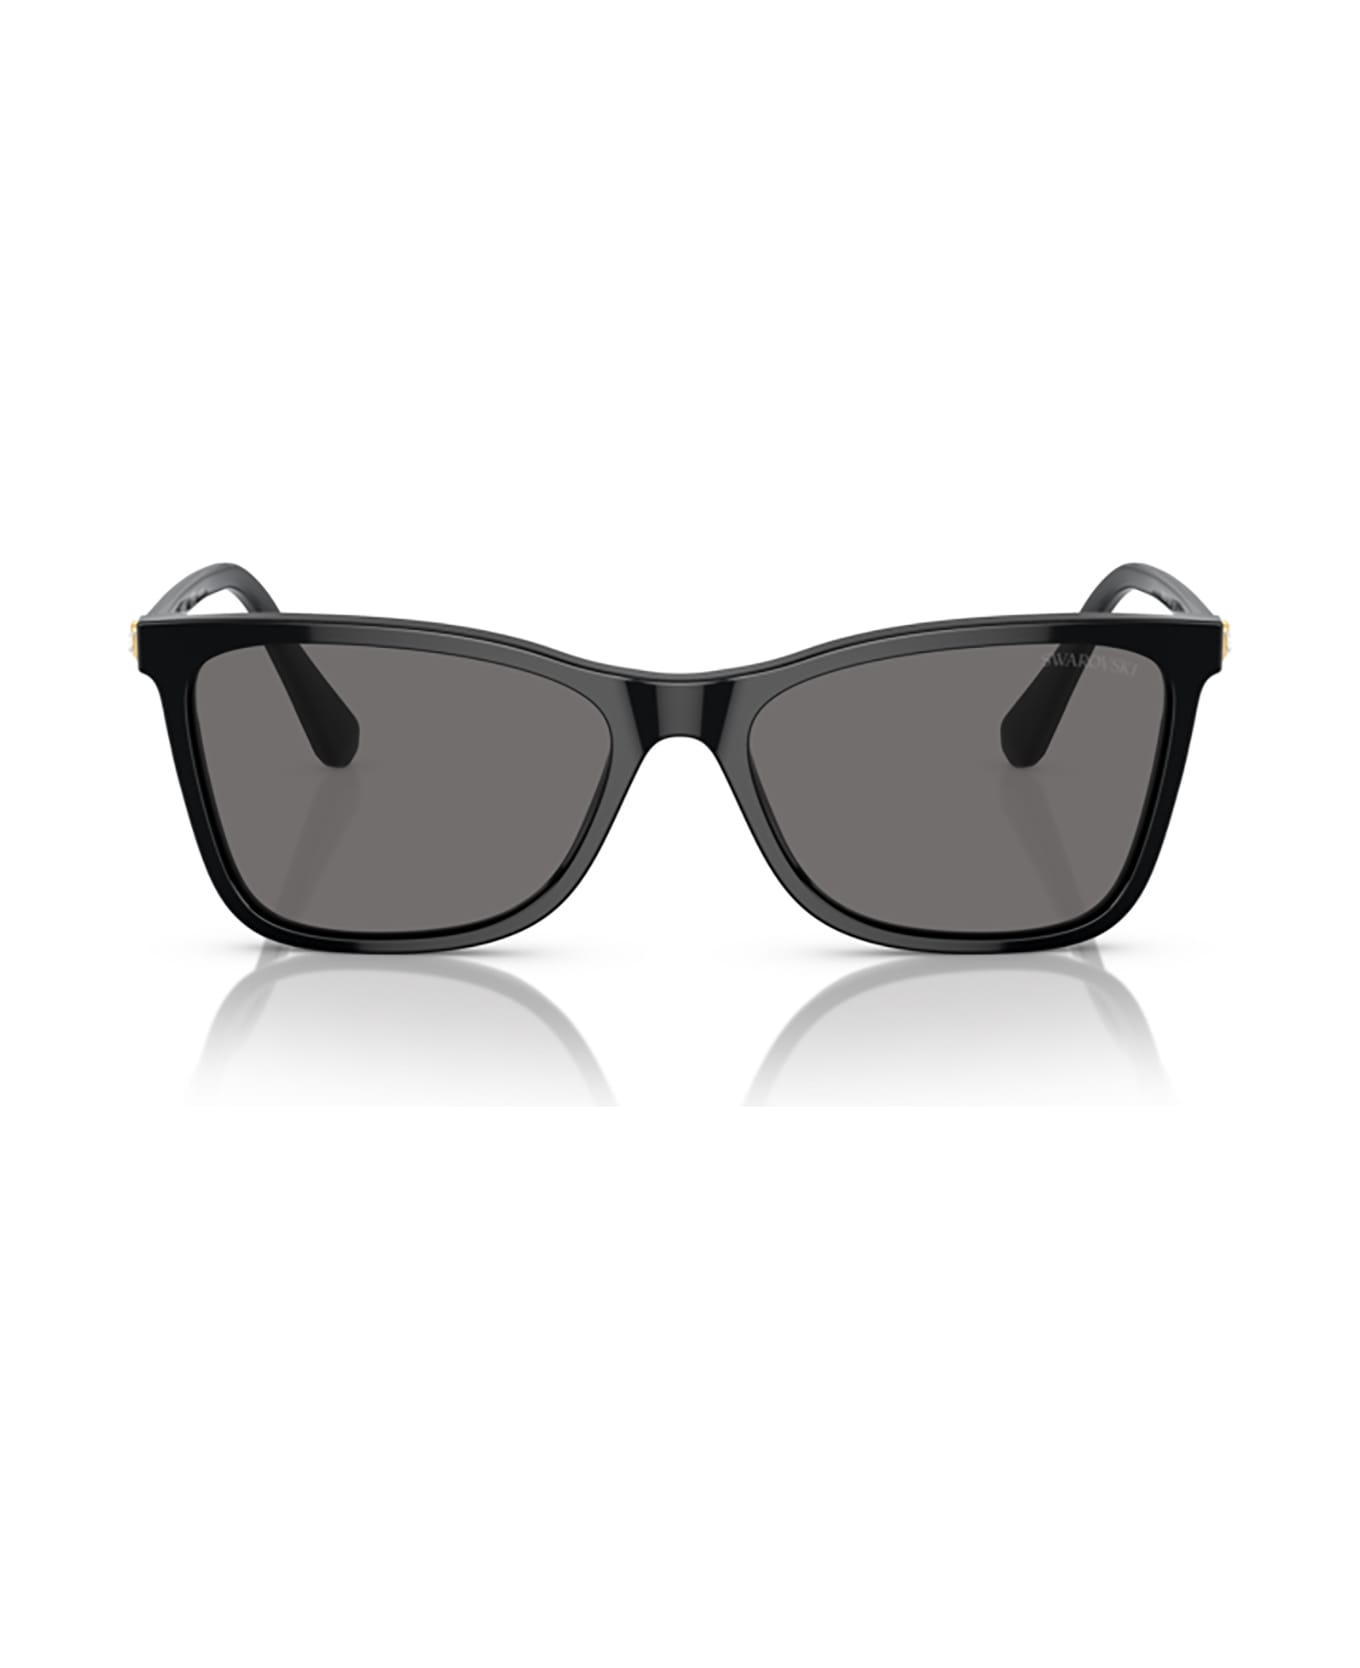 Swarovski Sk6004 Black Sunglasses - Black